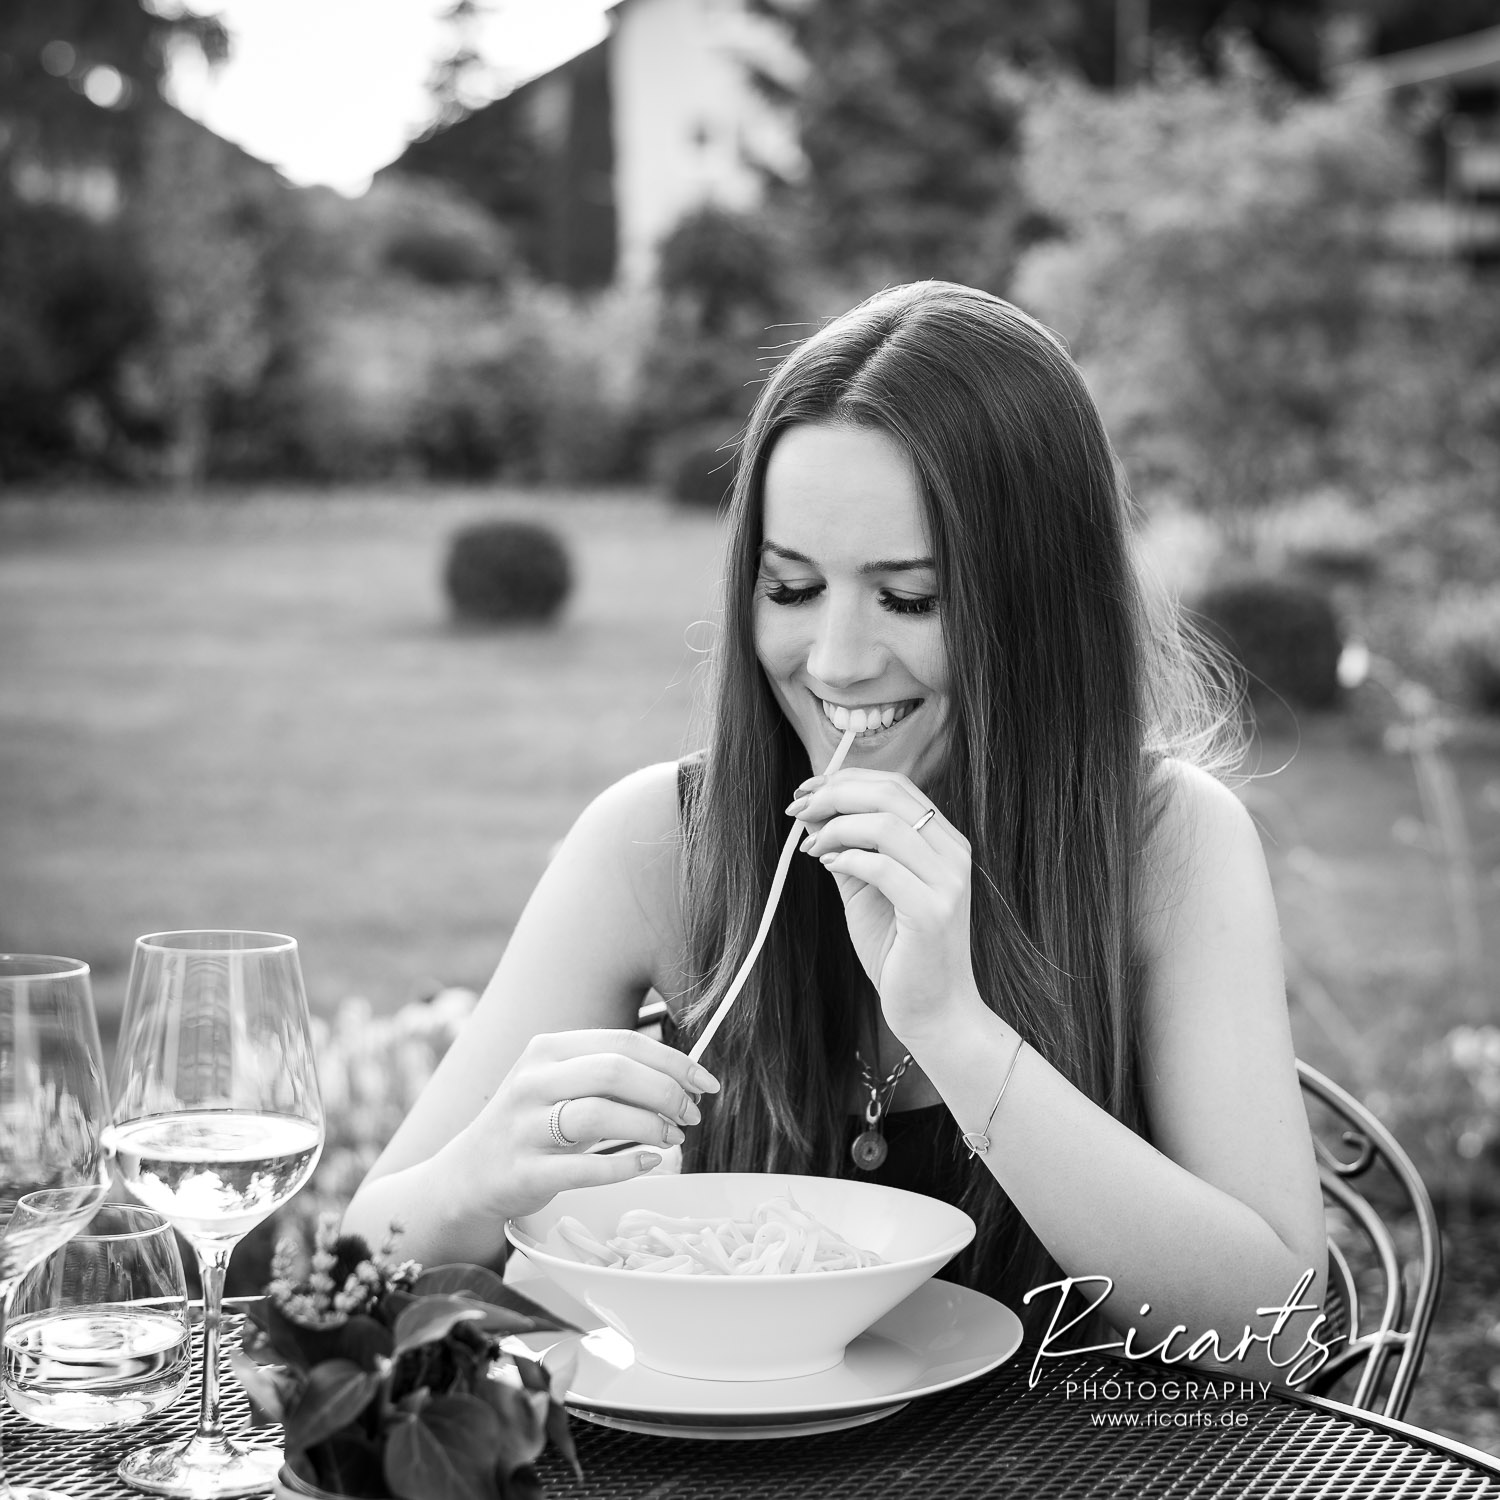 Junge Frau am Tisch isst Spaghetti